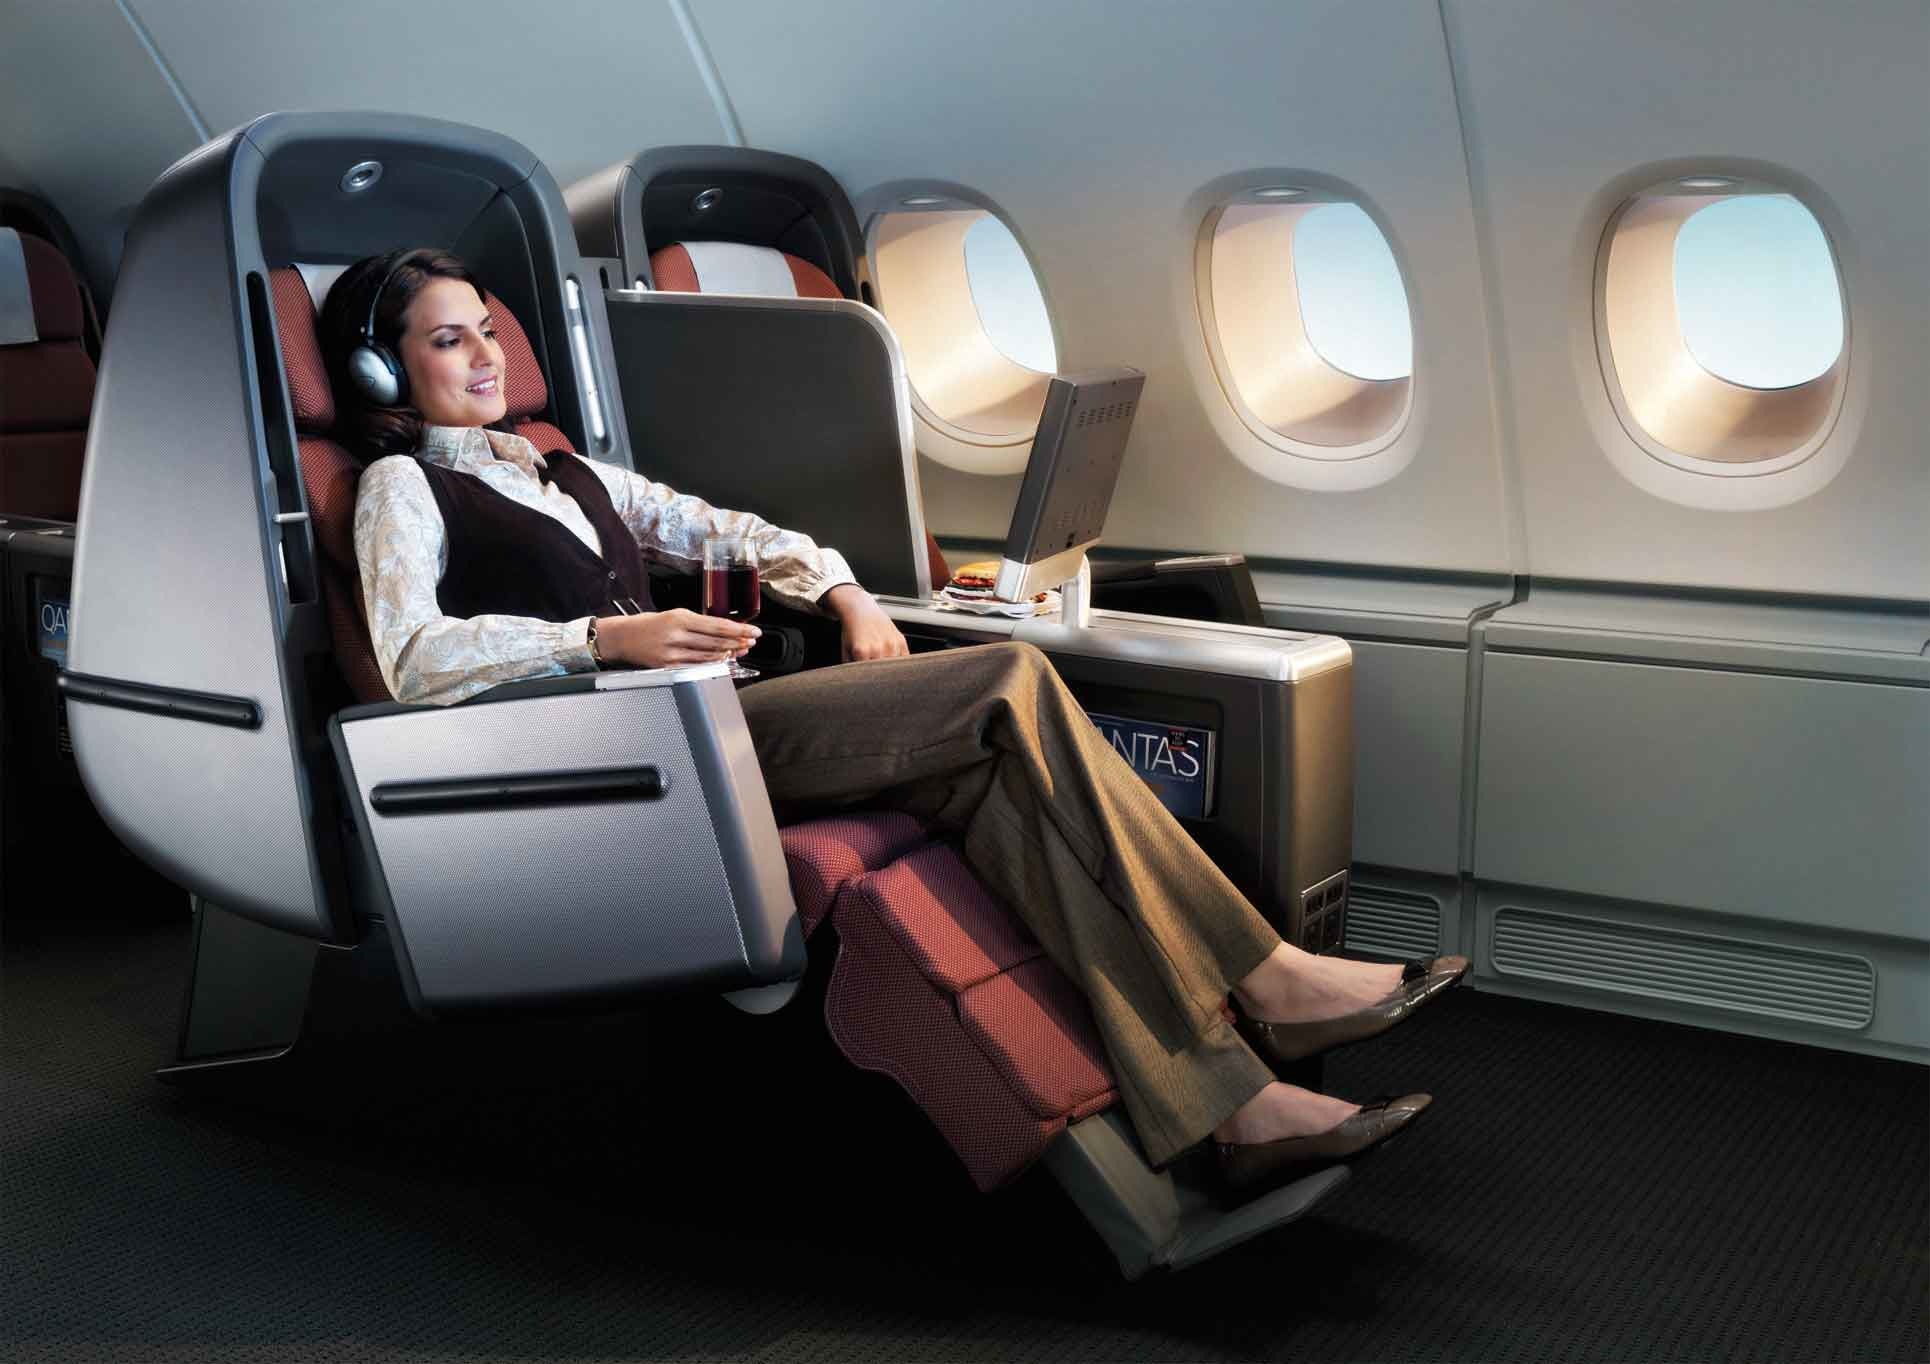 Airline business. Qantas бизнес класс. Qantas Airlines бизнес класс. Airbus a380 кресло бизнес. Бизнес класс в самолете.